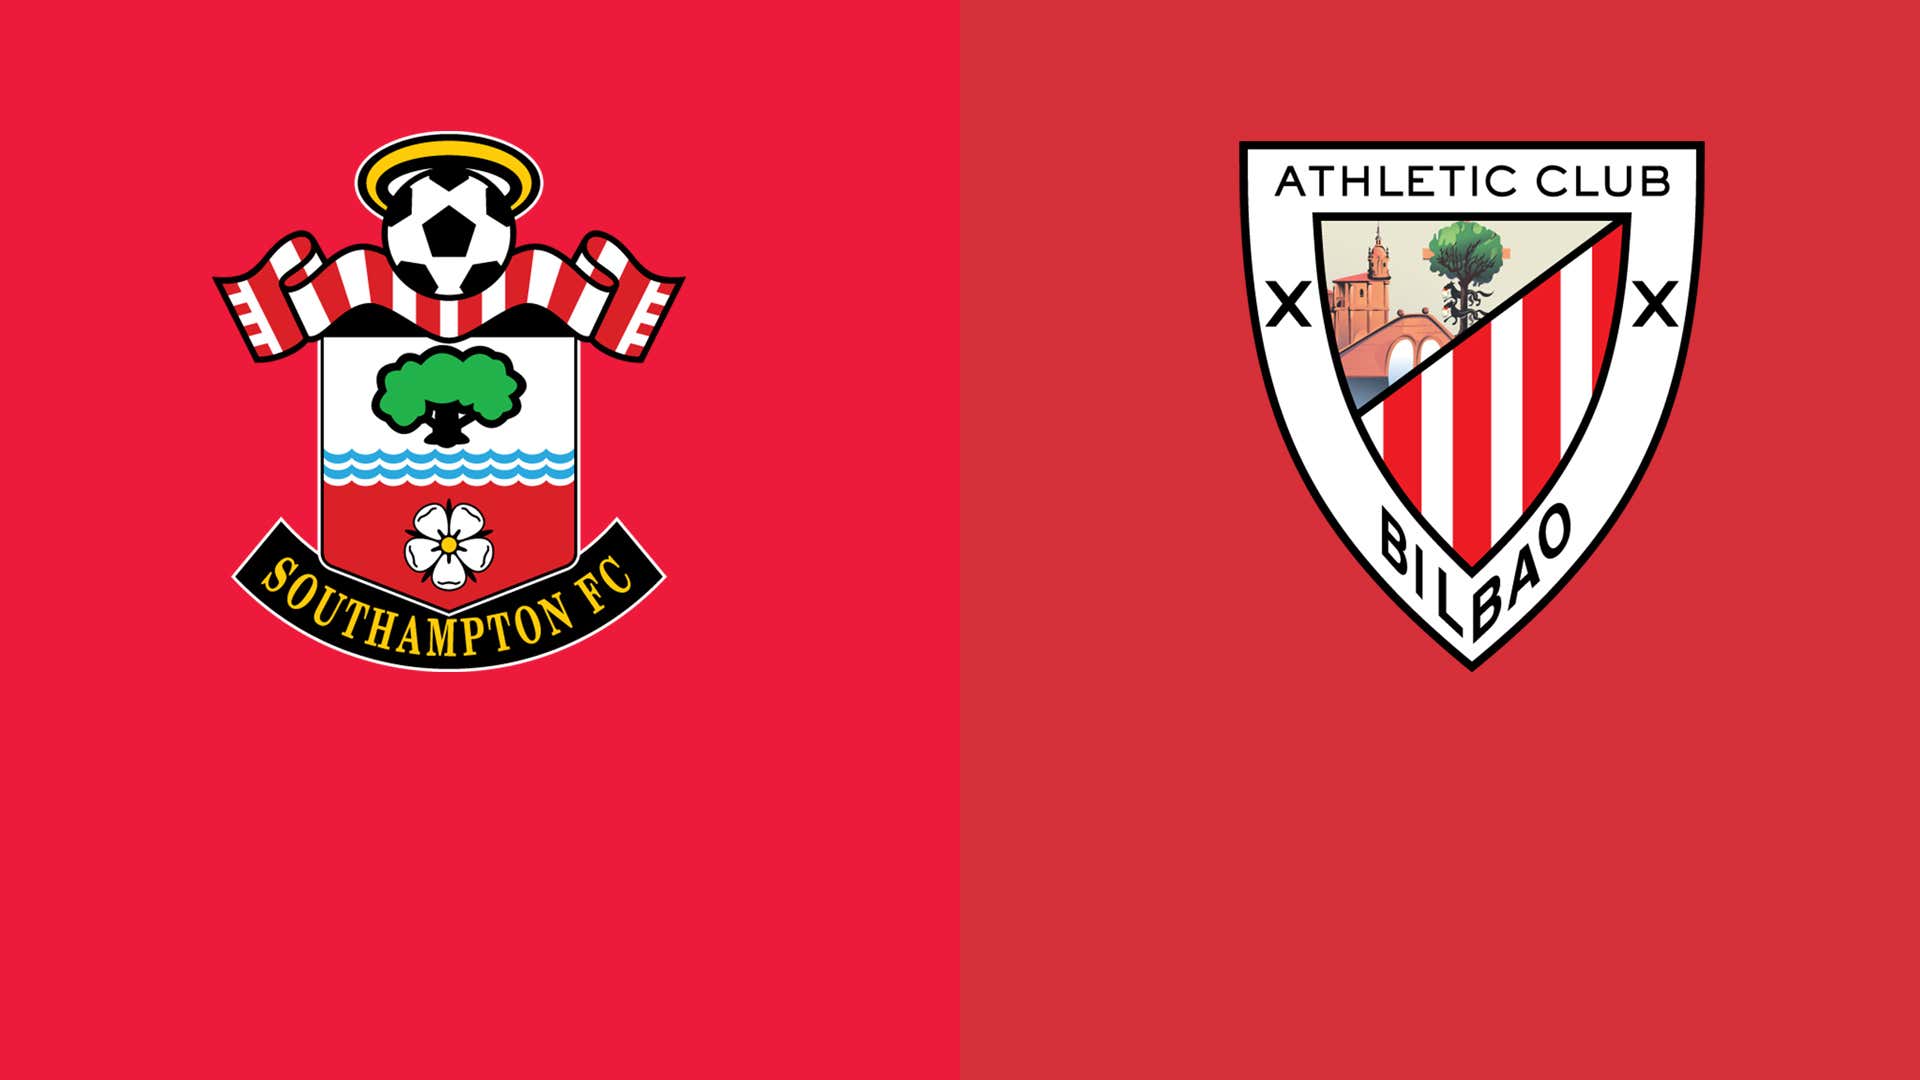 Southampton vs. Athletic, dónde ver